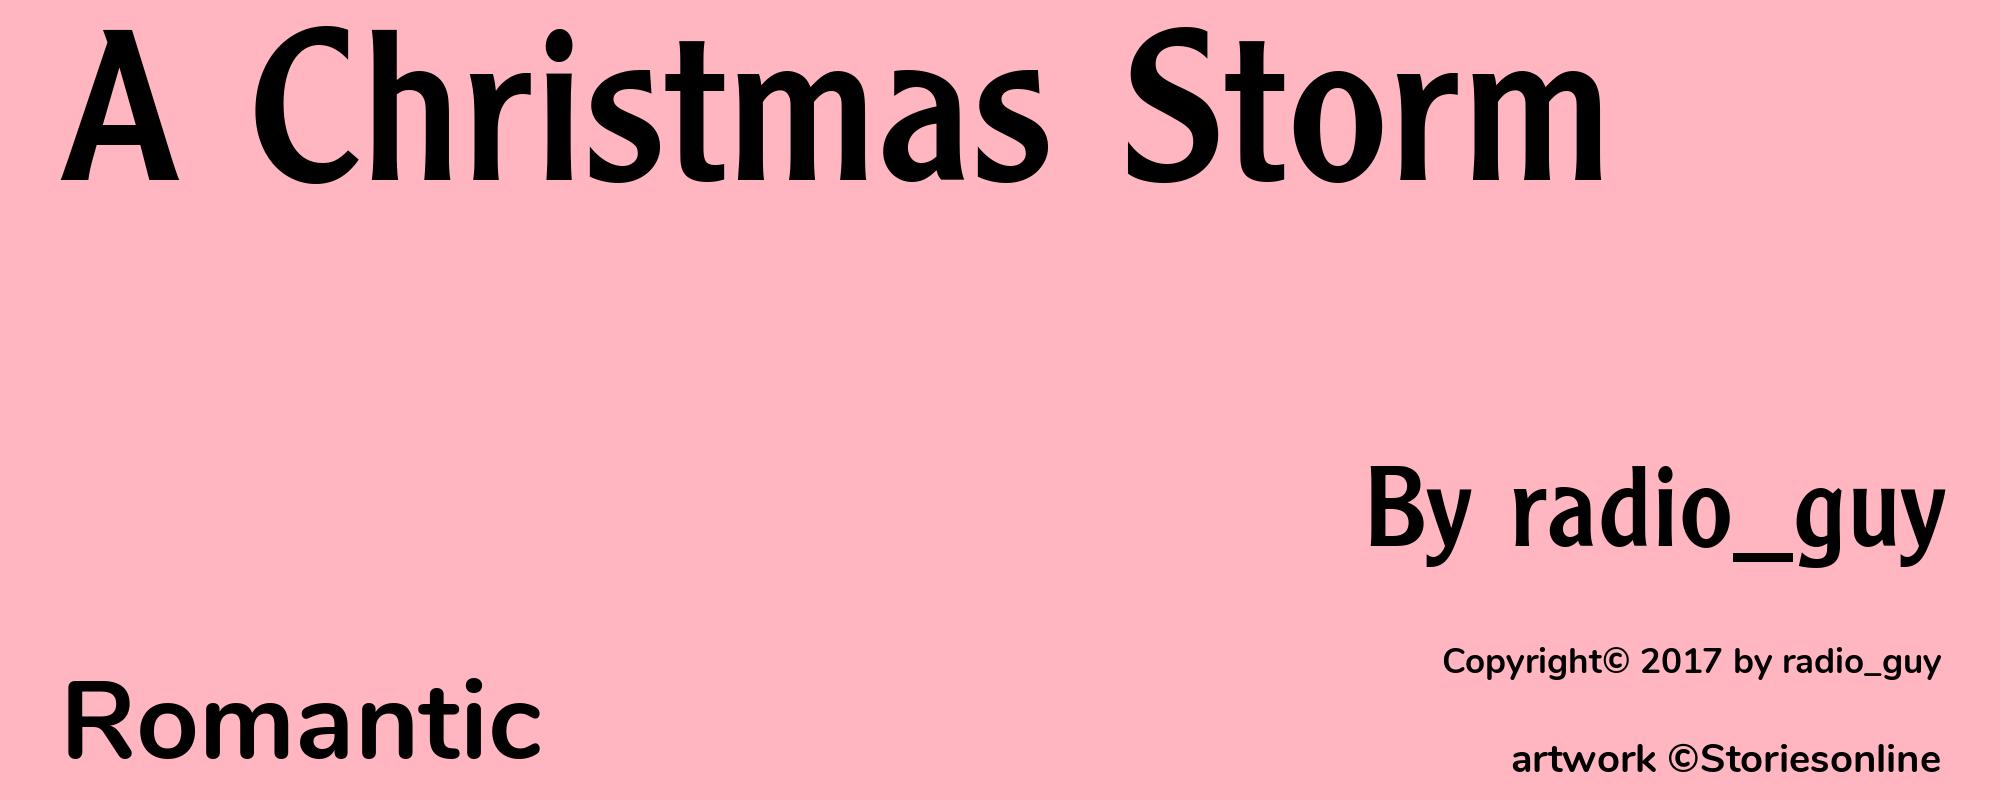 A Christmas Storm - Cover